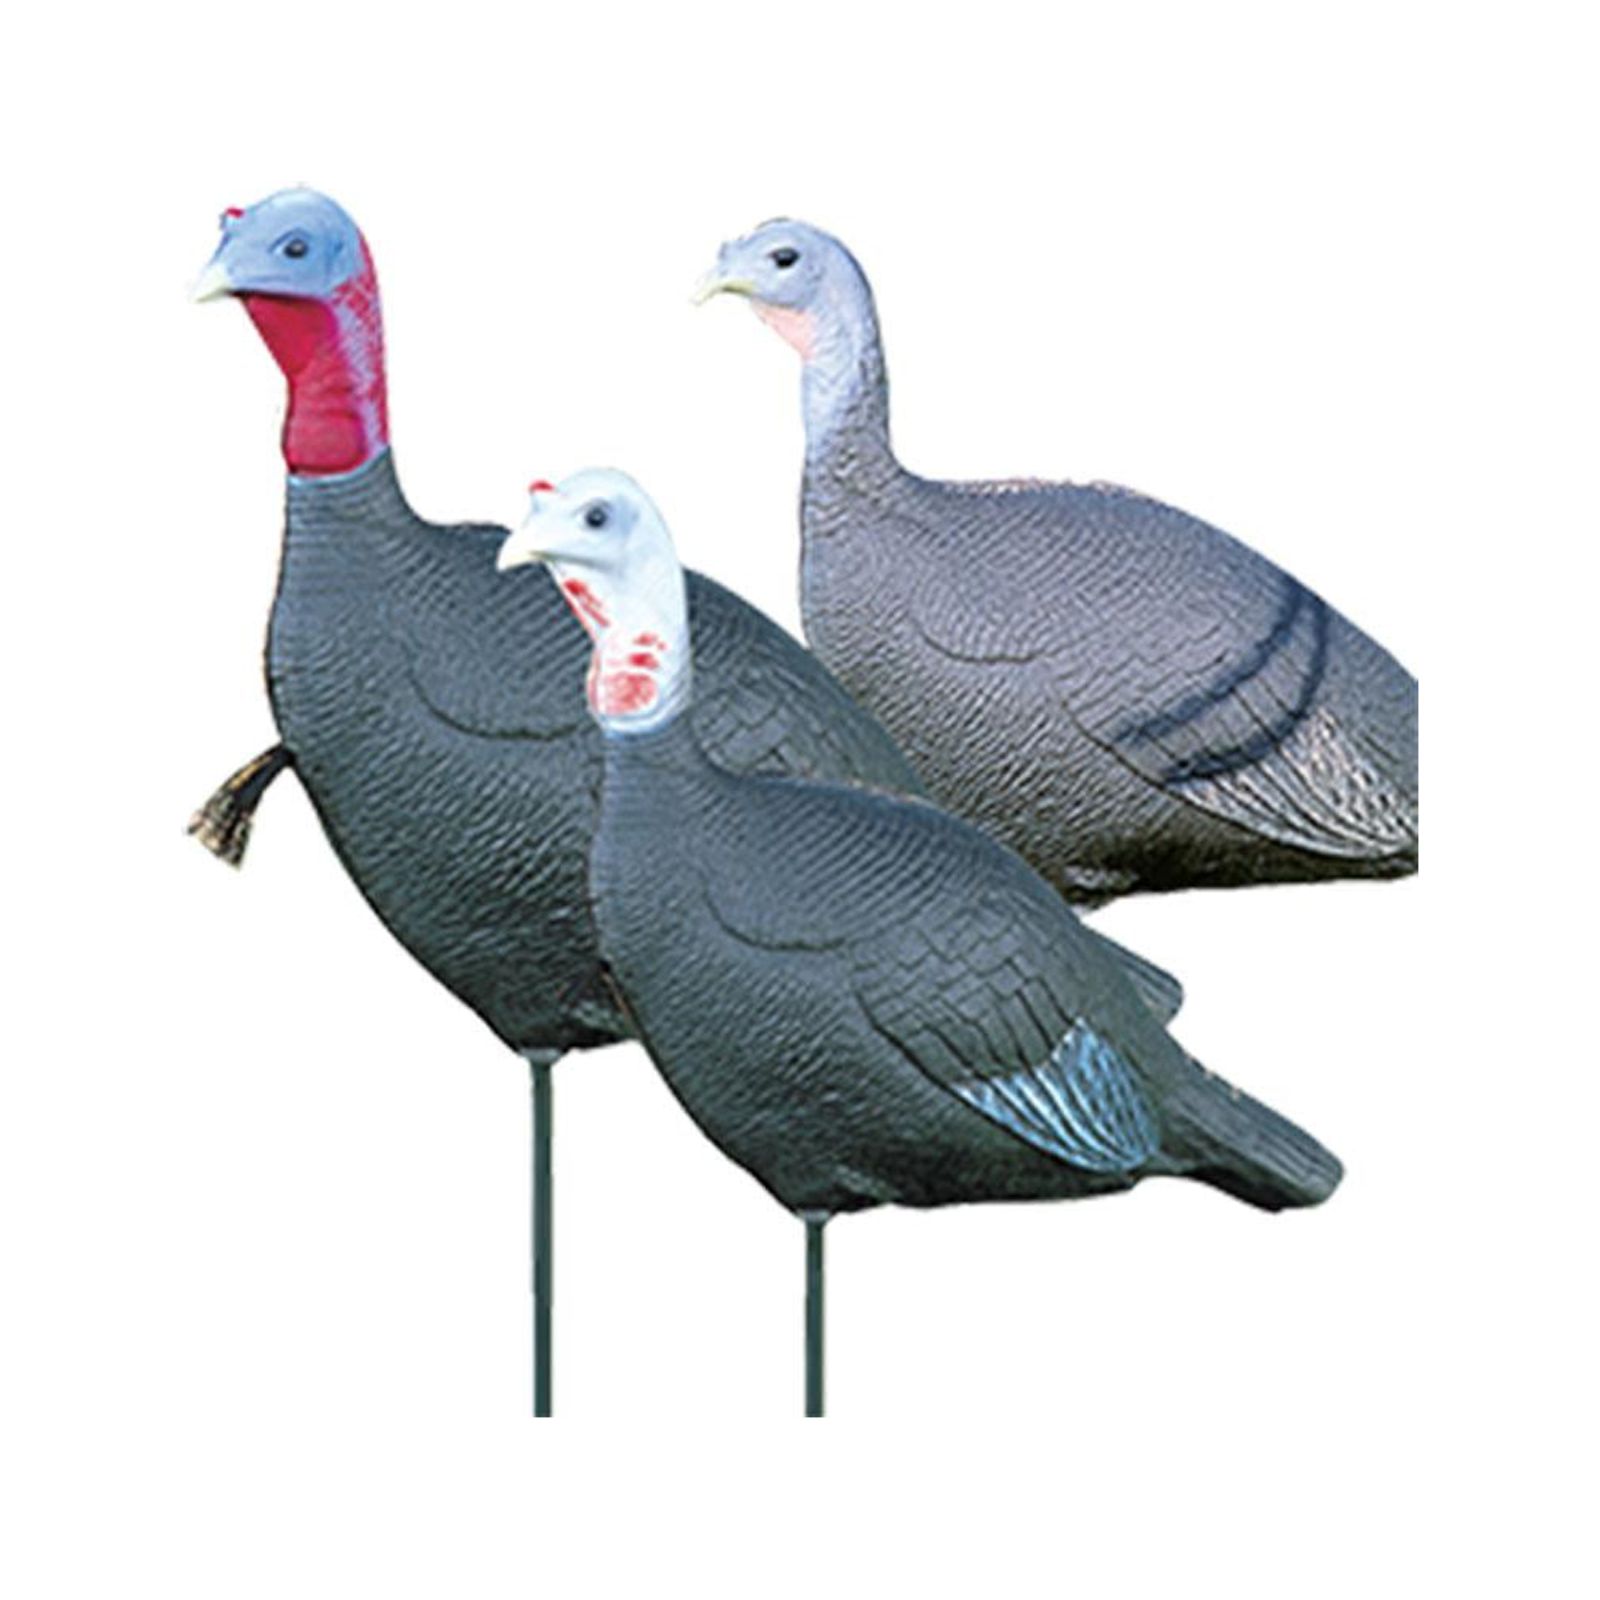 Flambeau Feather Flex Love Triangle Set Turkey Decoys, 3-Pack - image 1 of 2